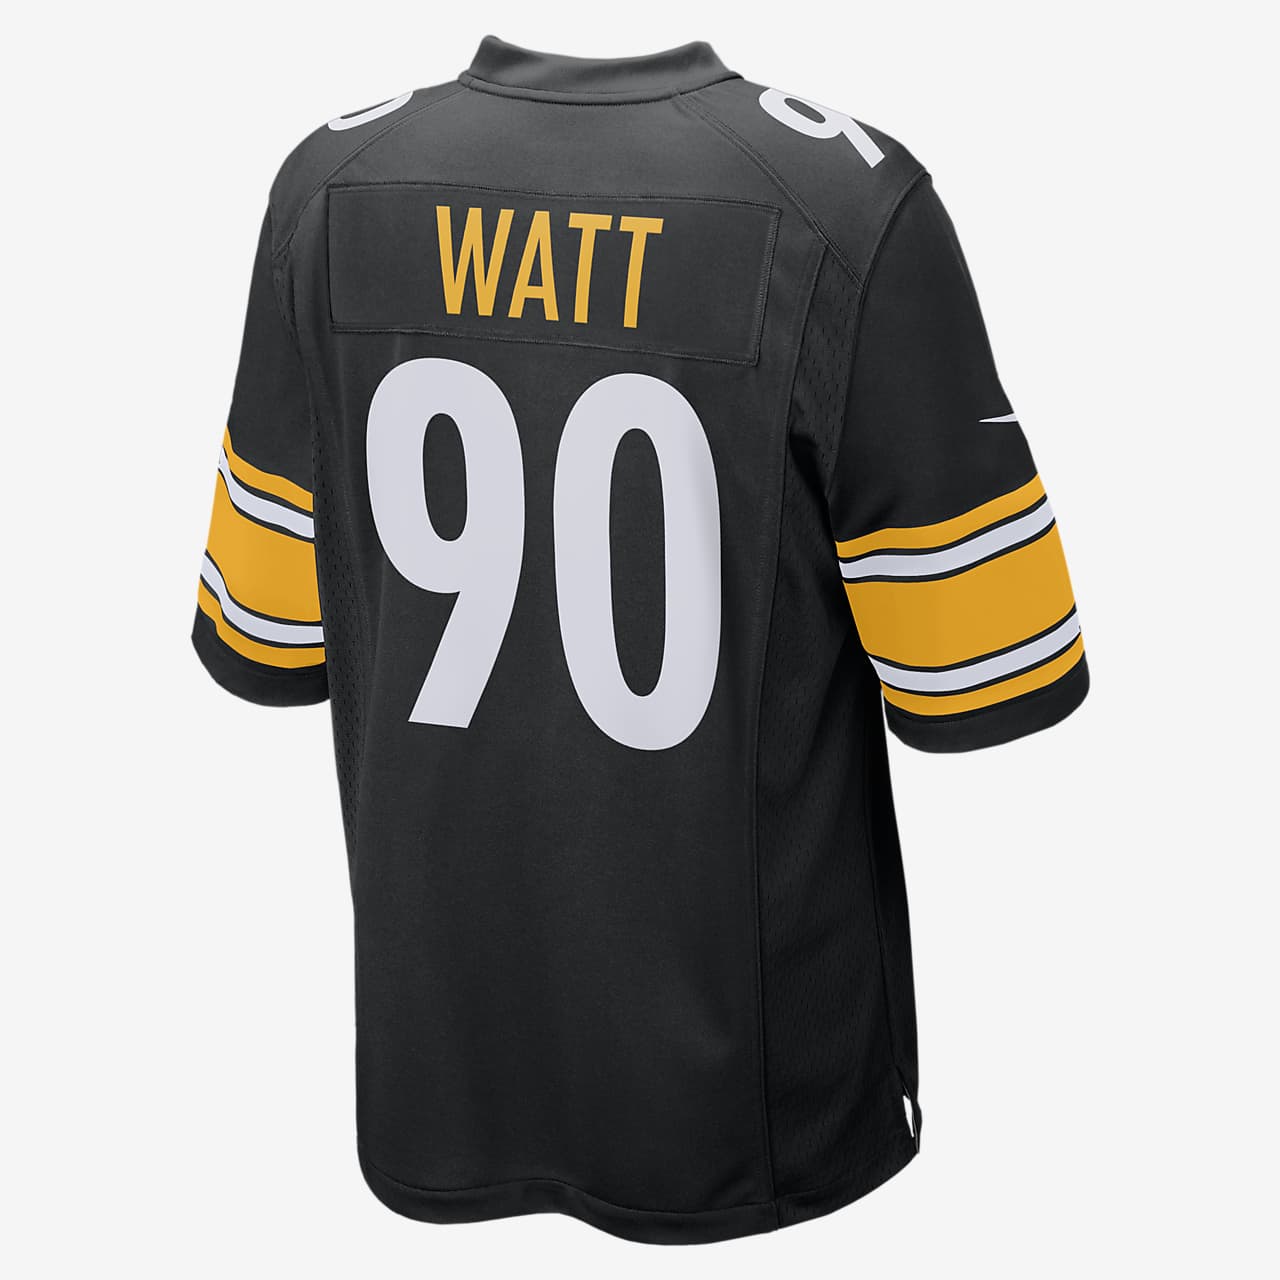 NFL Pittsburgh Steelers (T.J. Watt) Men's Game Football Jersey